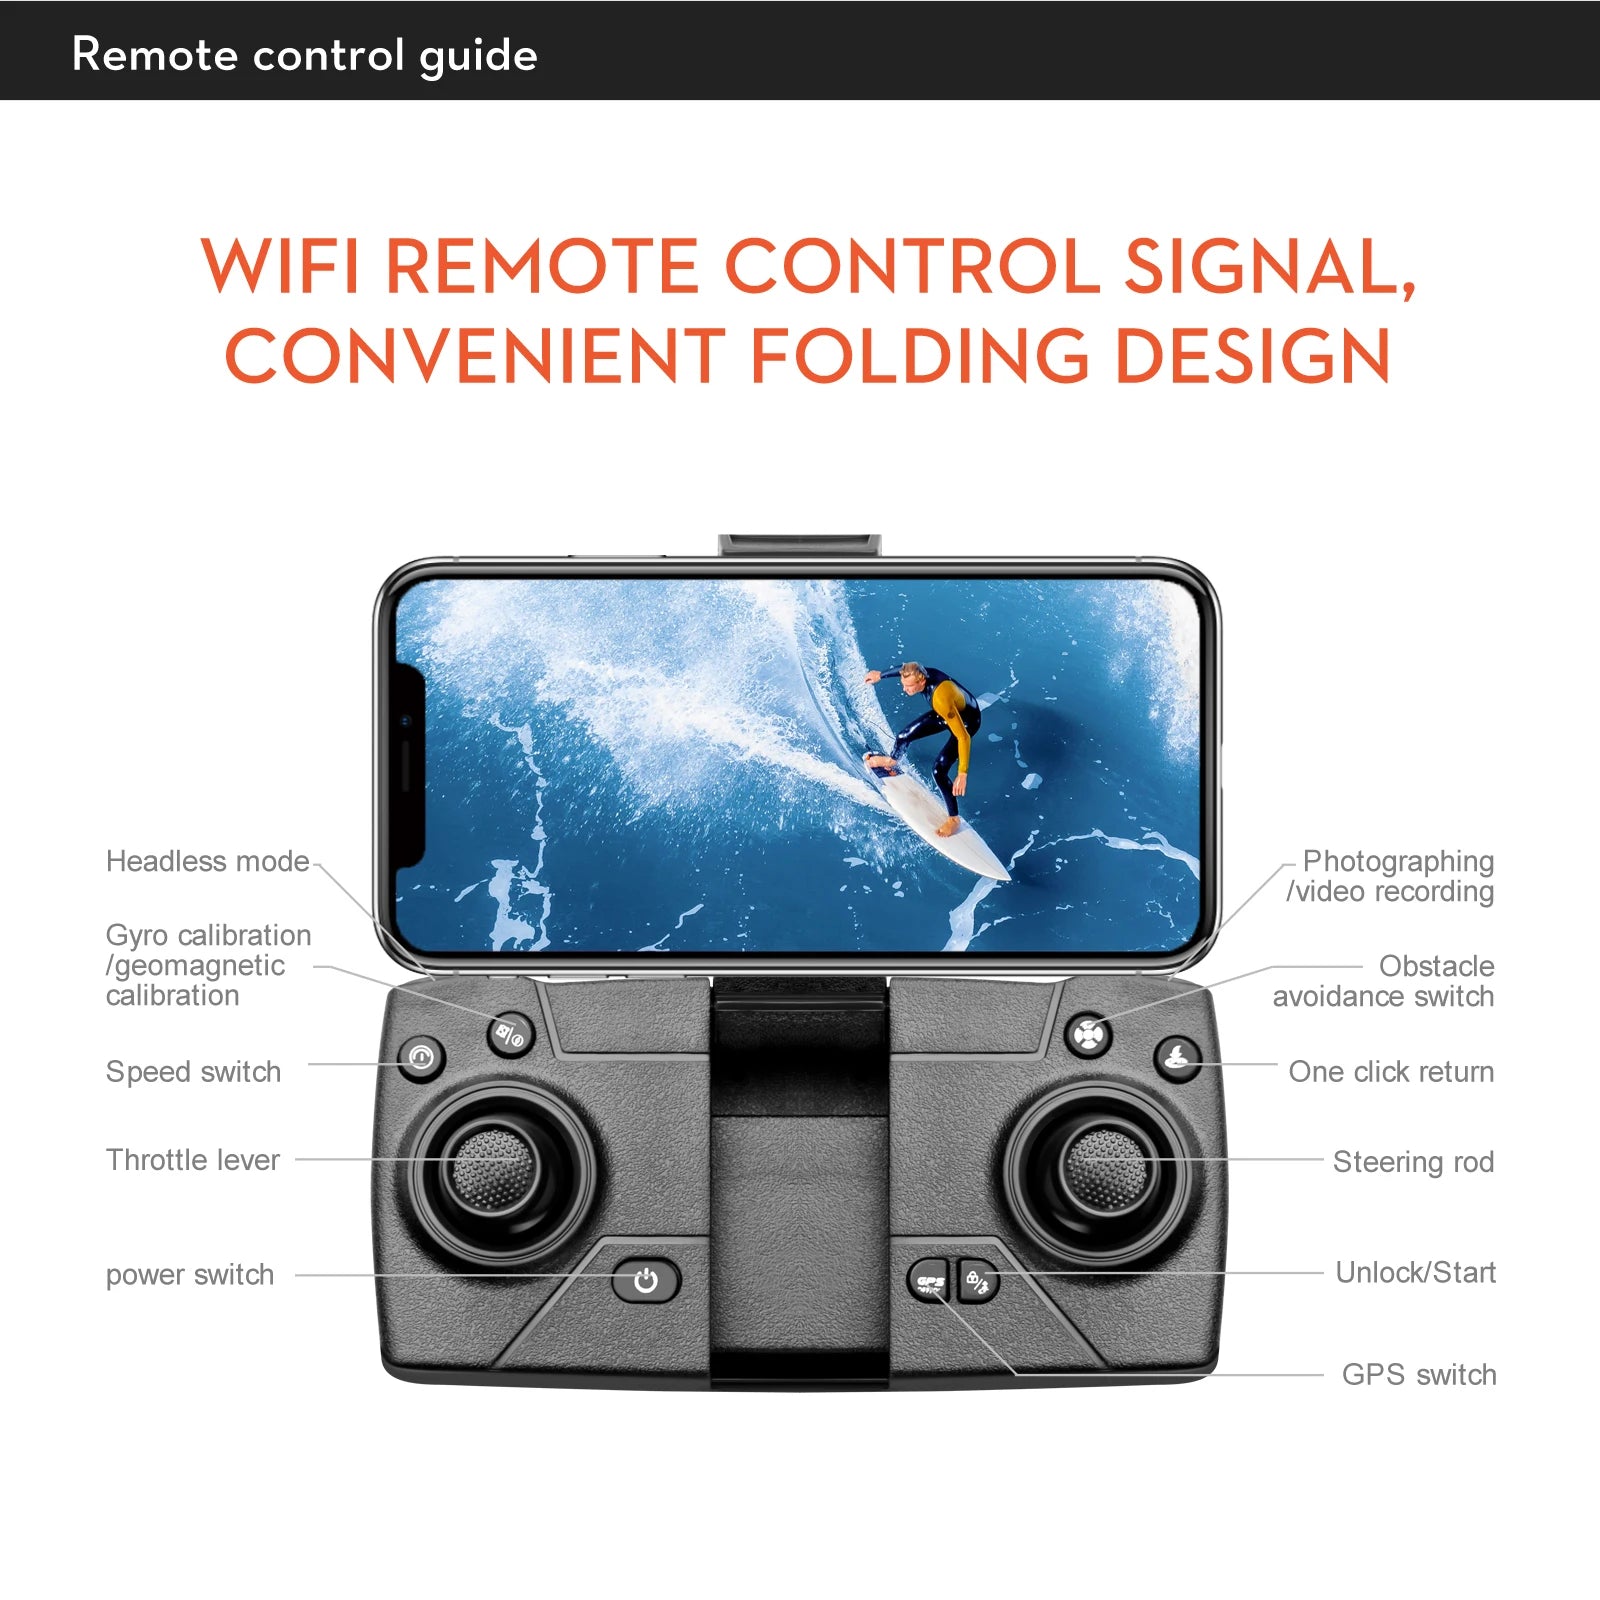 LS58 Drone, remote control guide wifi remote control signal, convenient folding design headless mode